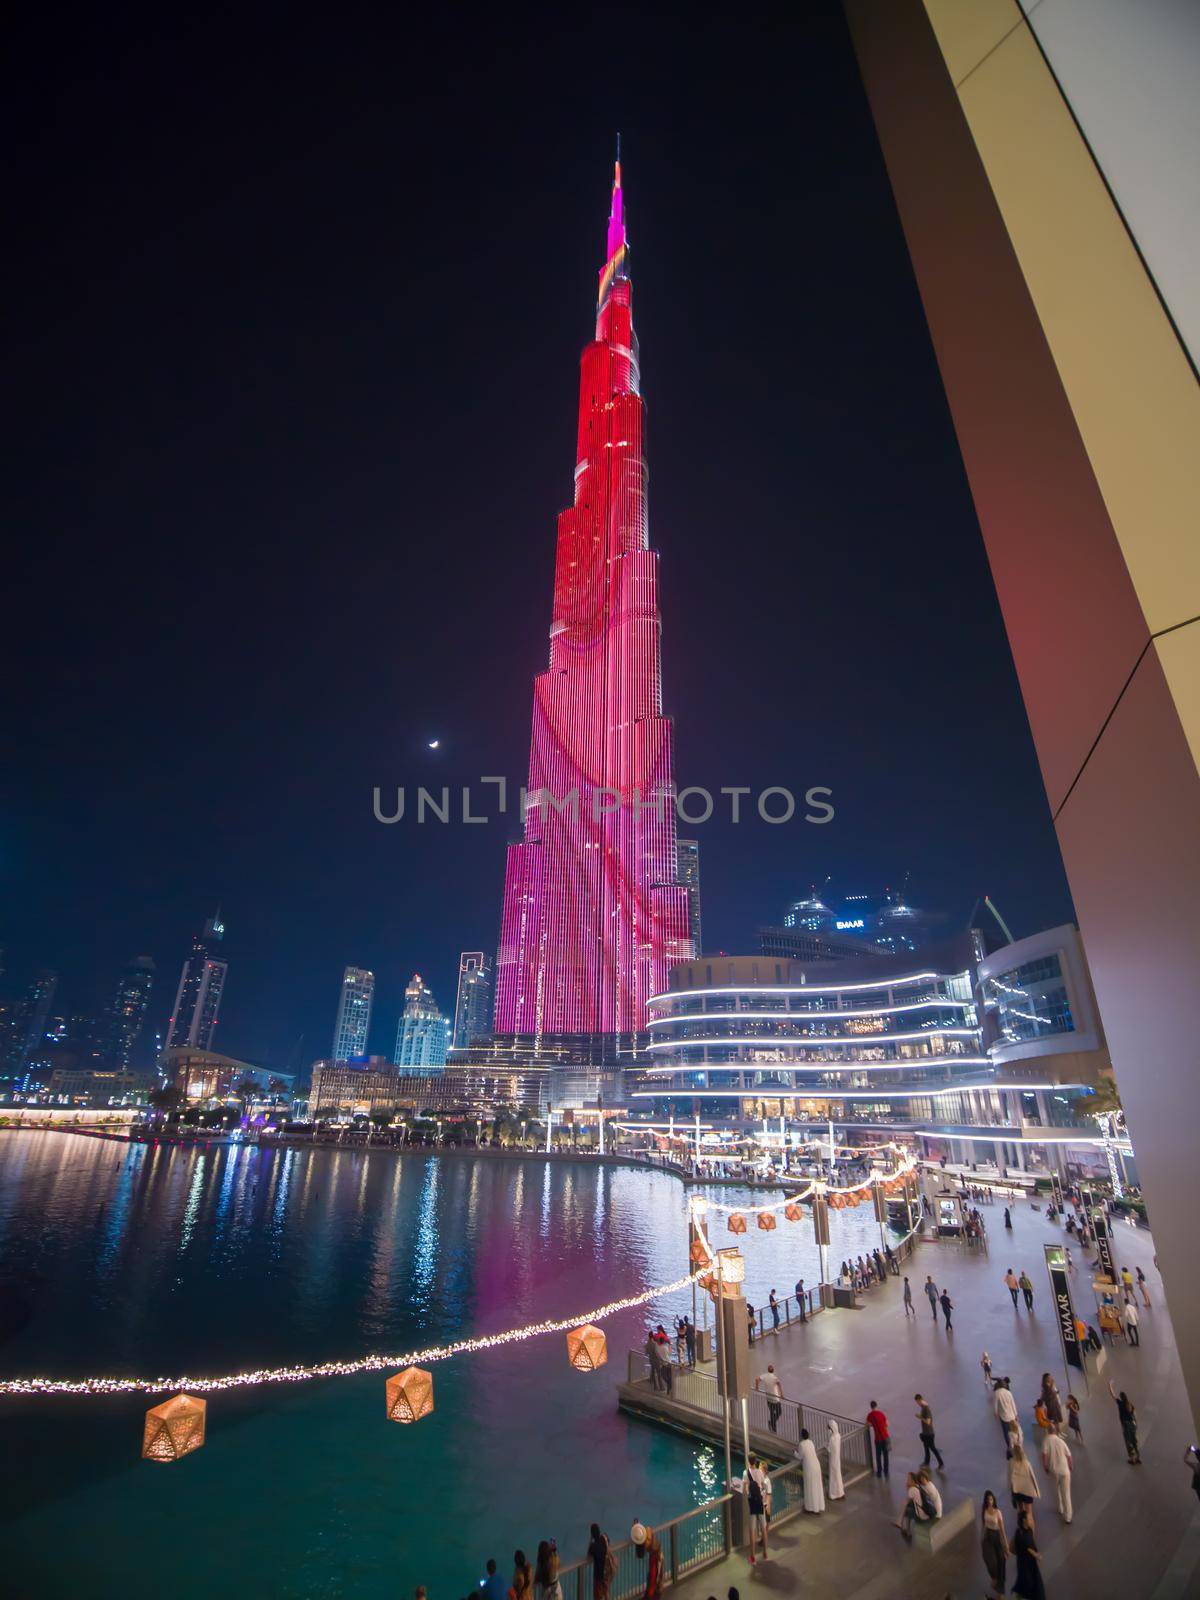 Square of Dubai fountains with illuminations of the Khalifa Tower